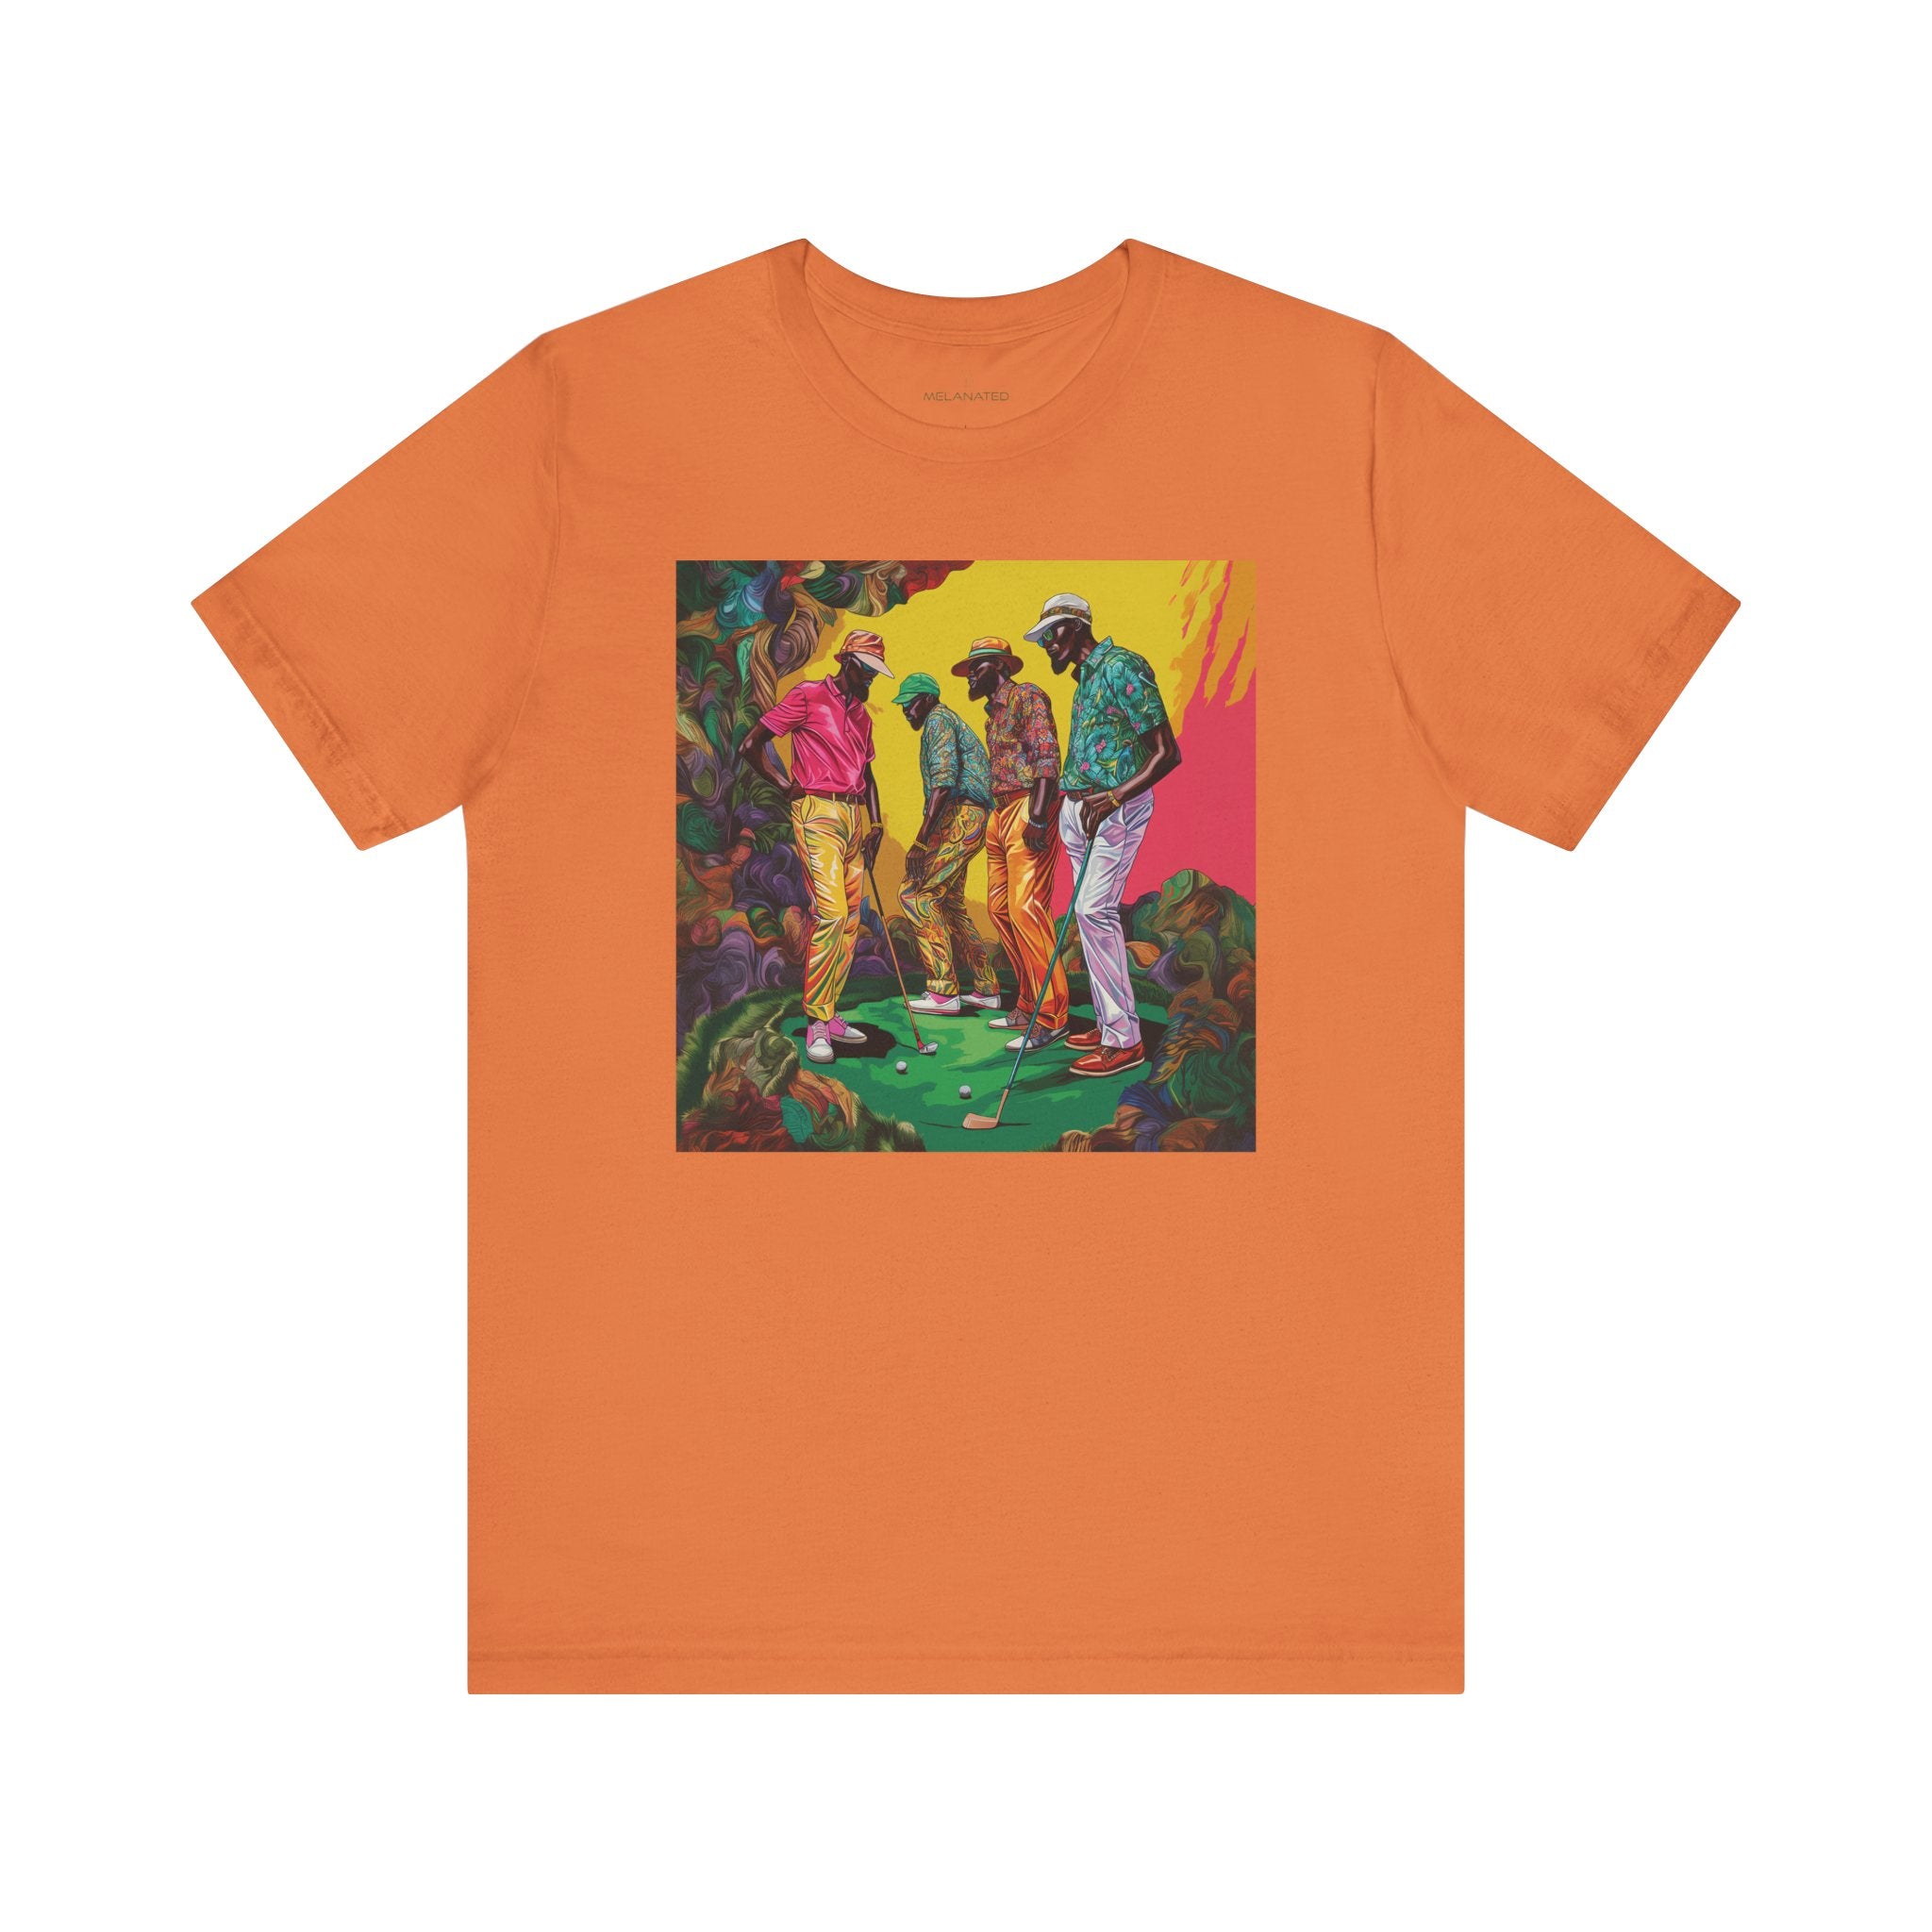 Black Men Golfers Tee Shirt in orange.